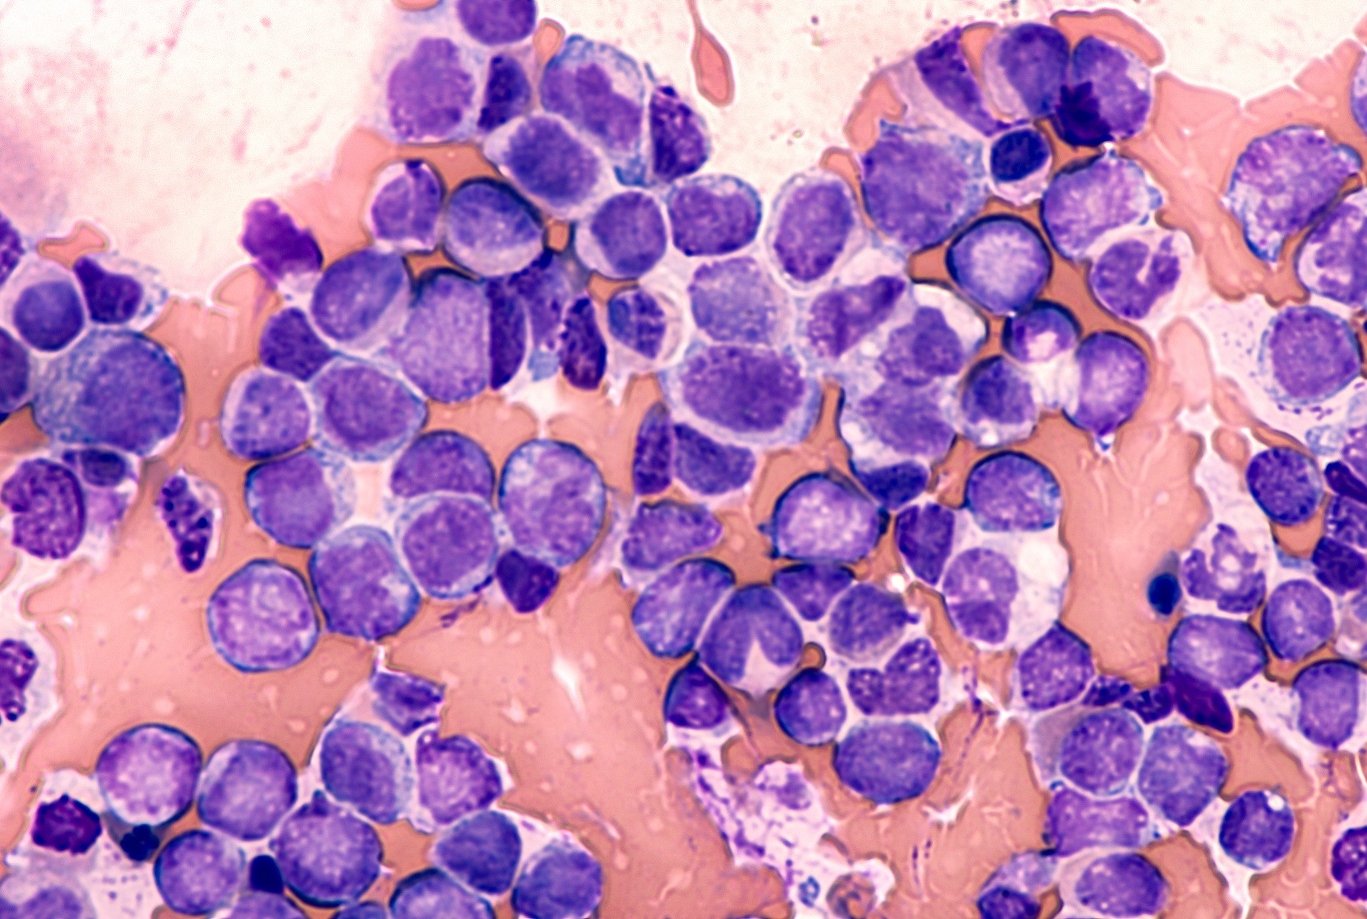  blast cells of acute myeloid leukemia